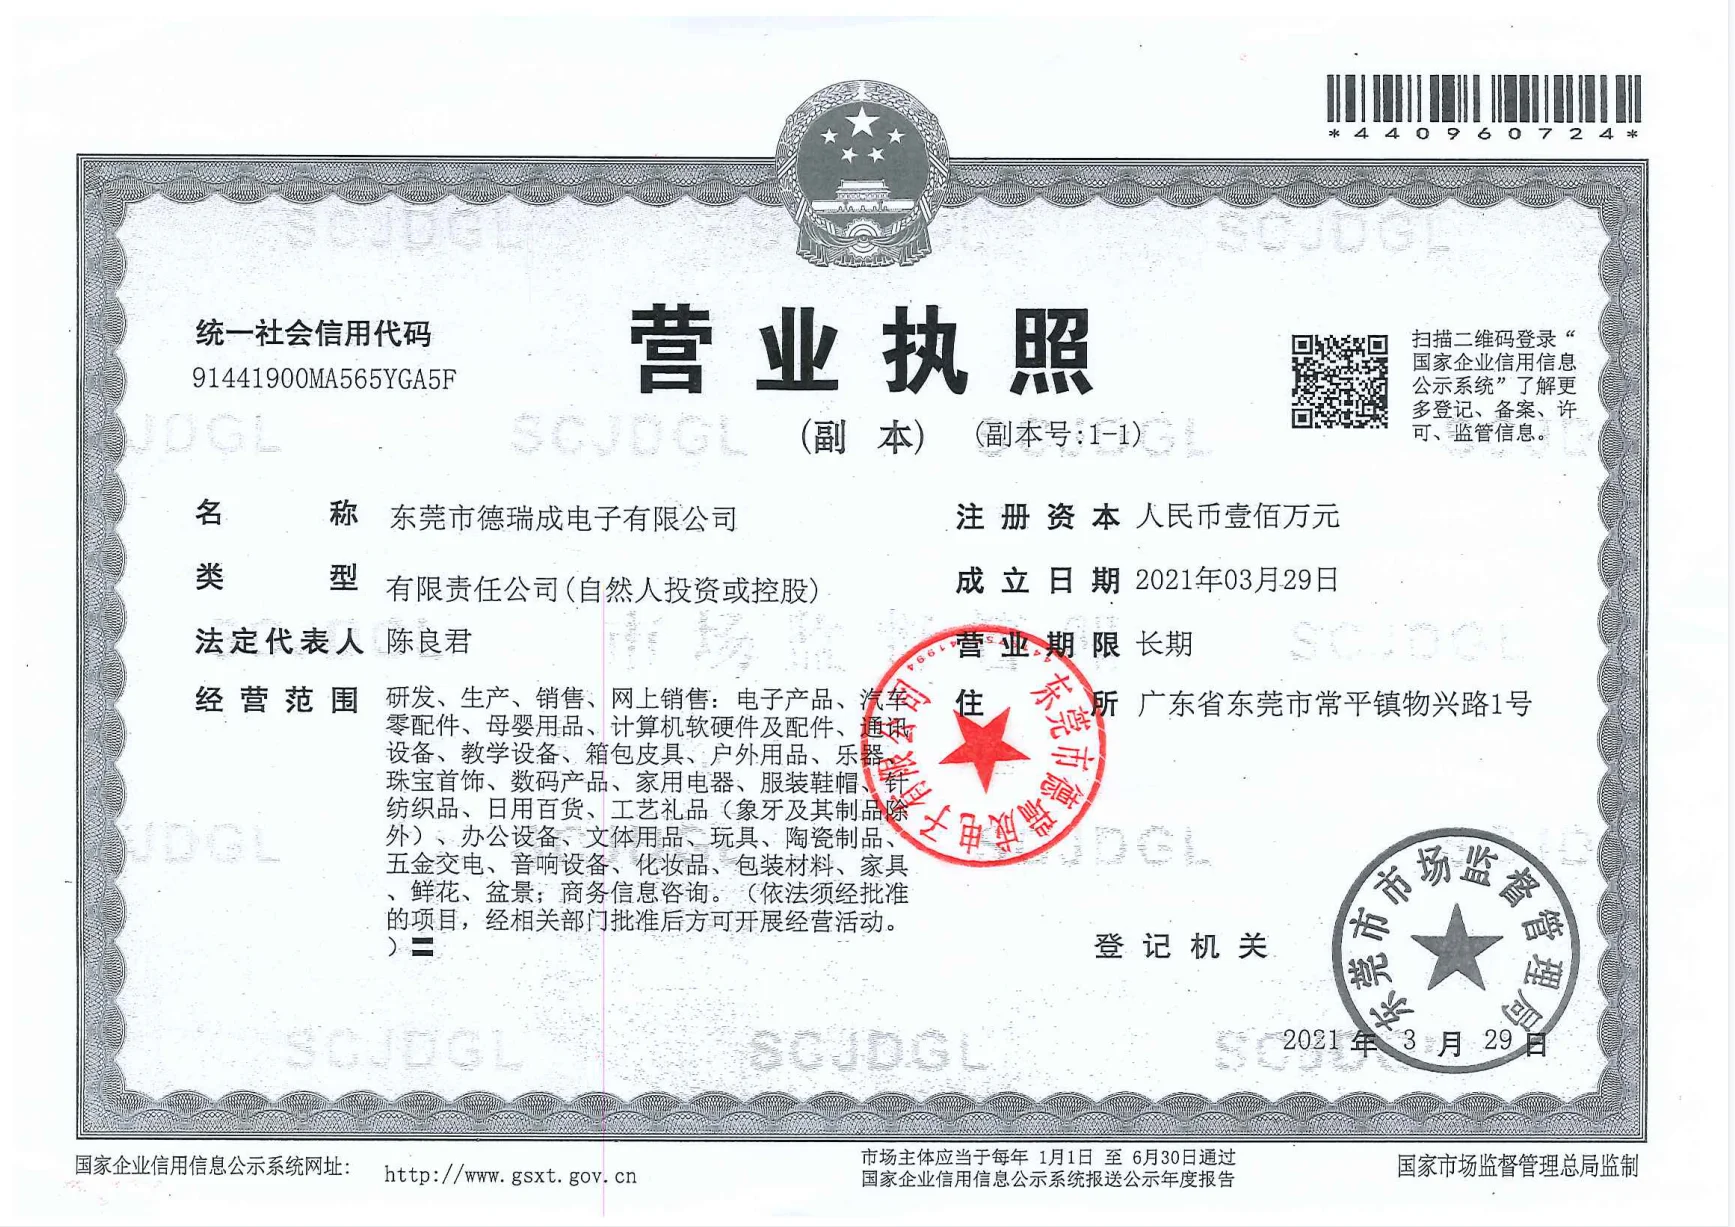 Company Overview - Dongguan Deruichen Electronics Co., Ltd.